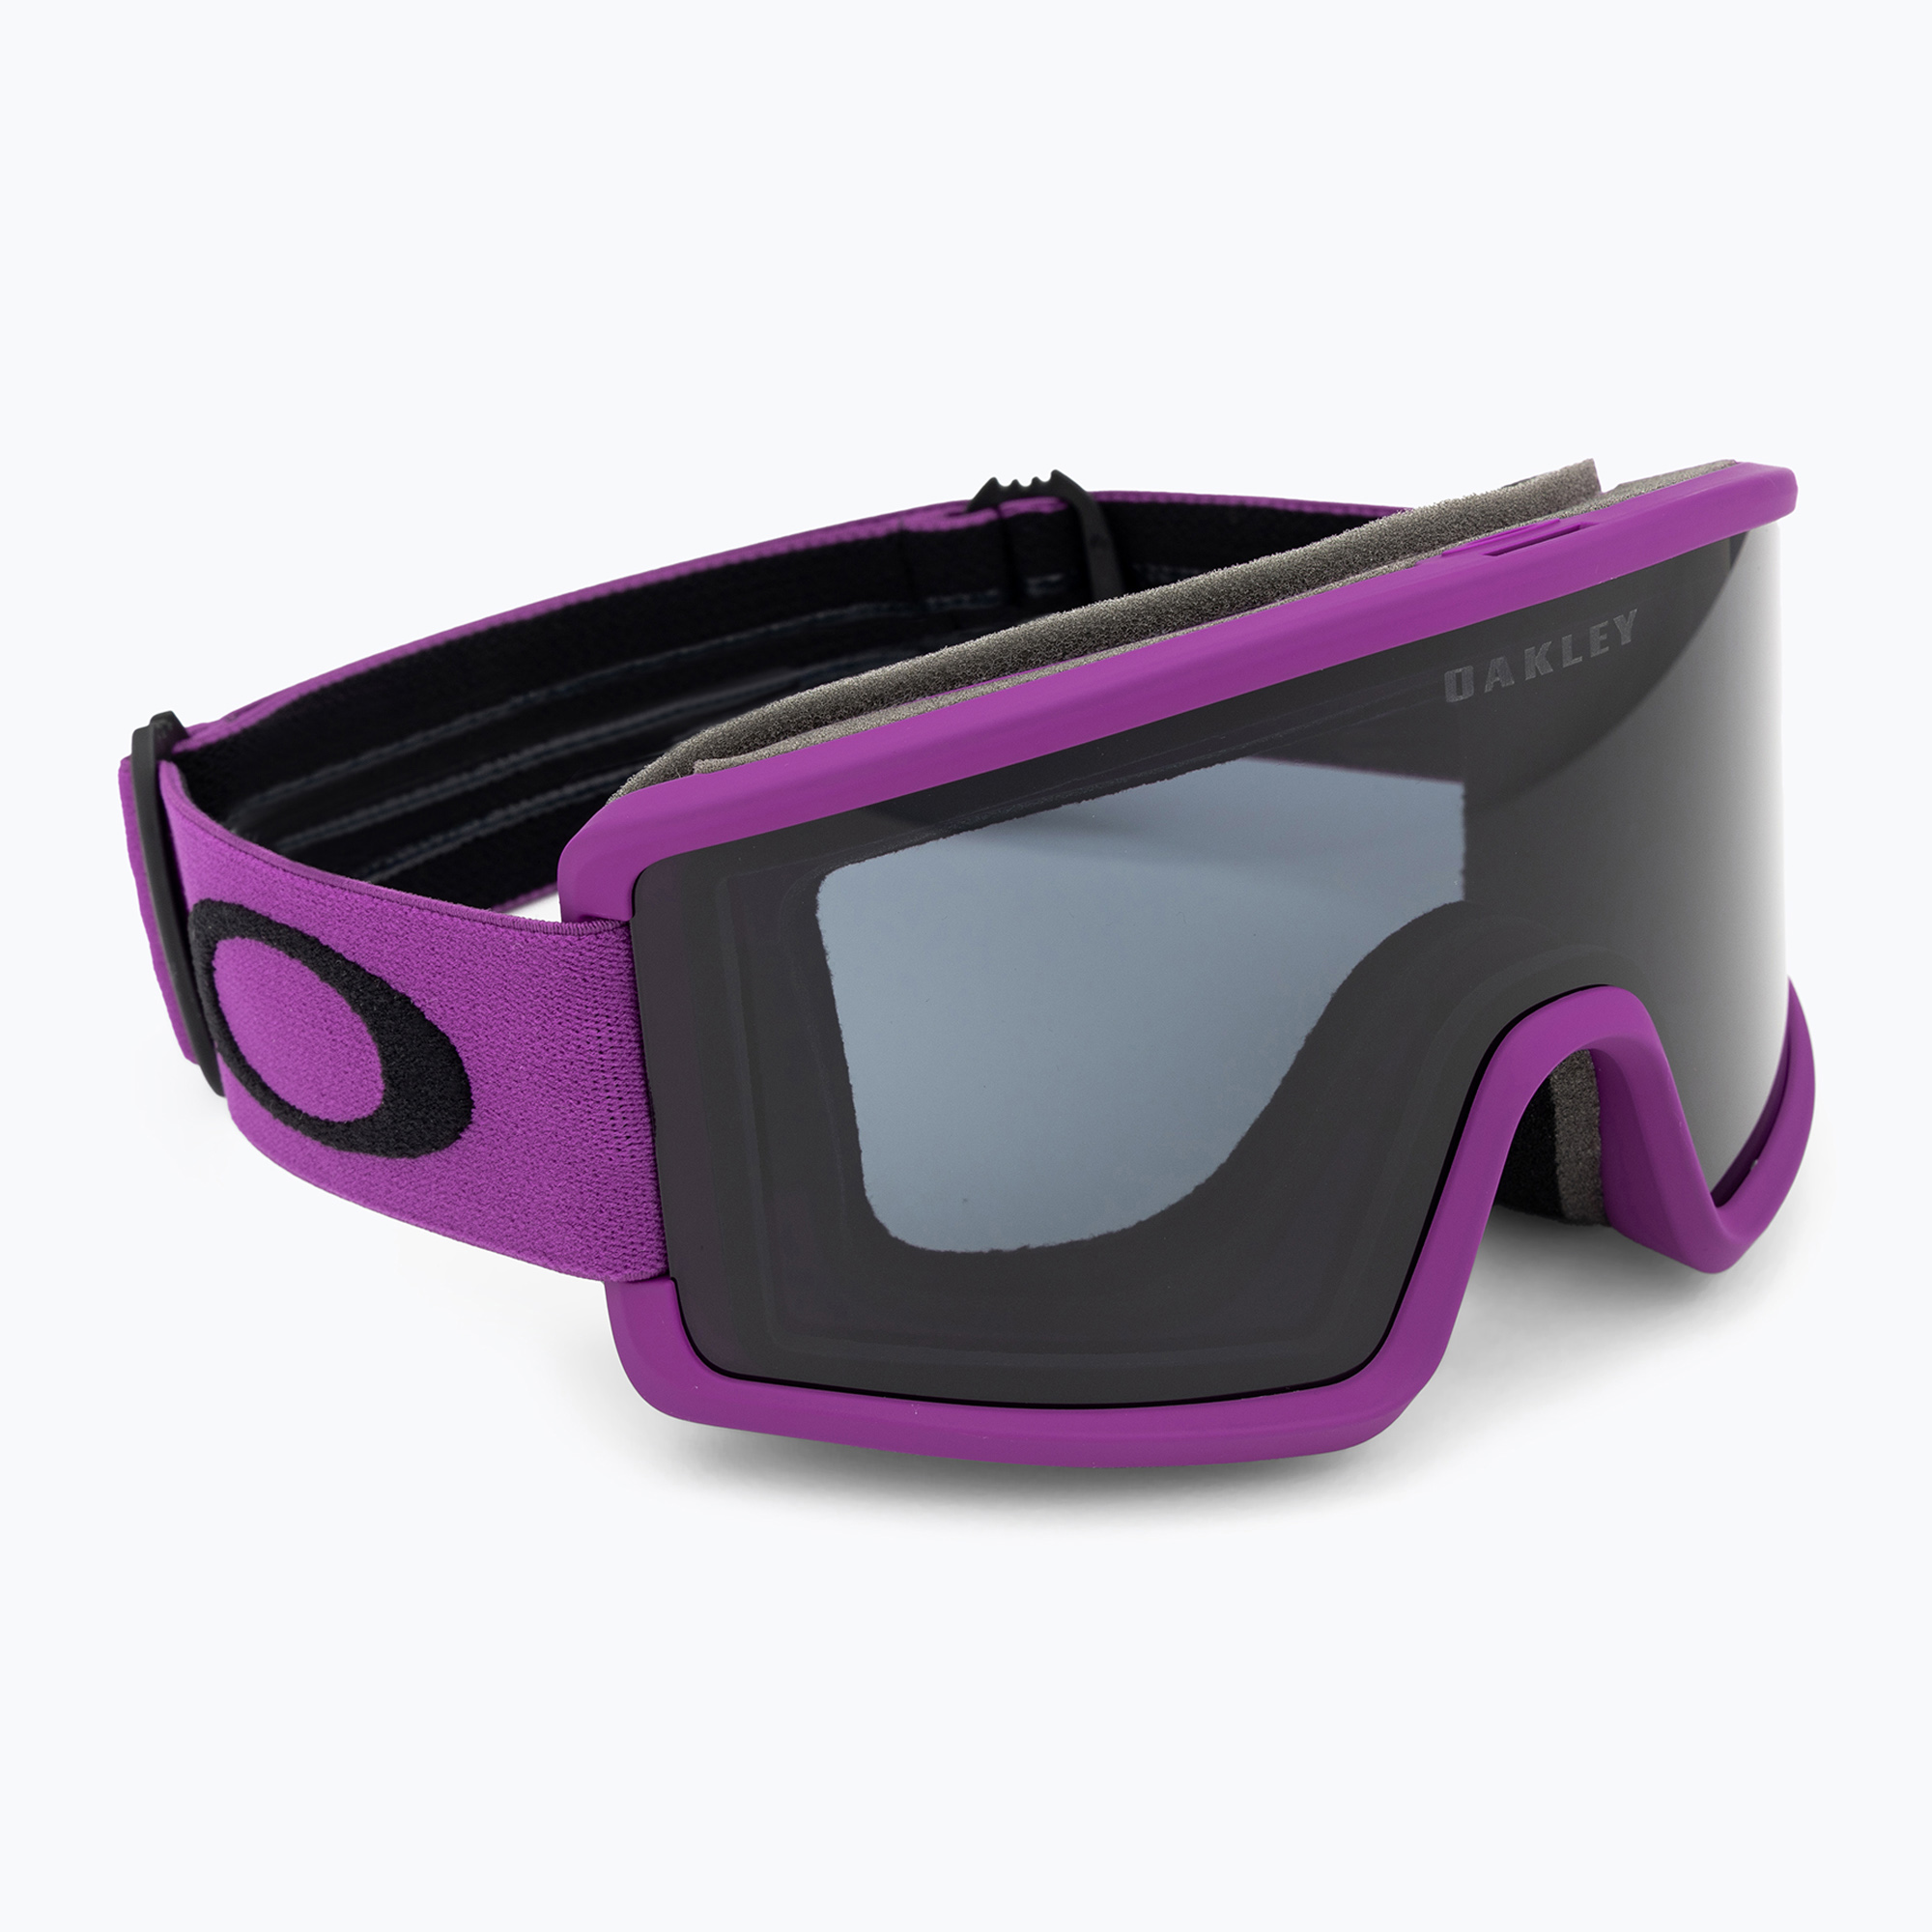 Ochelari de schi Oakley Target Line ultra violet/gri închis